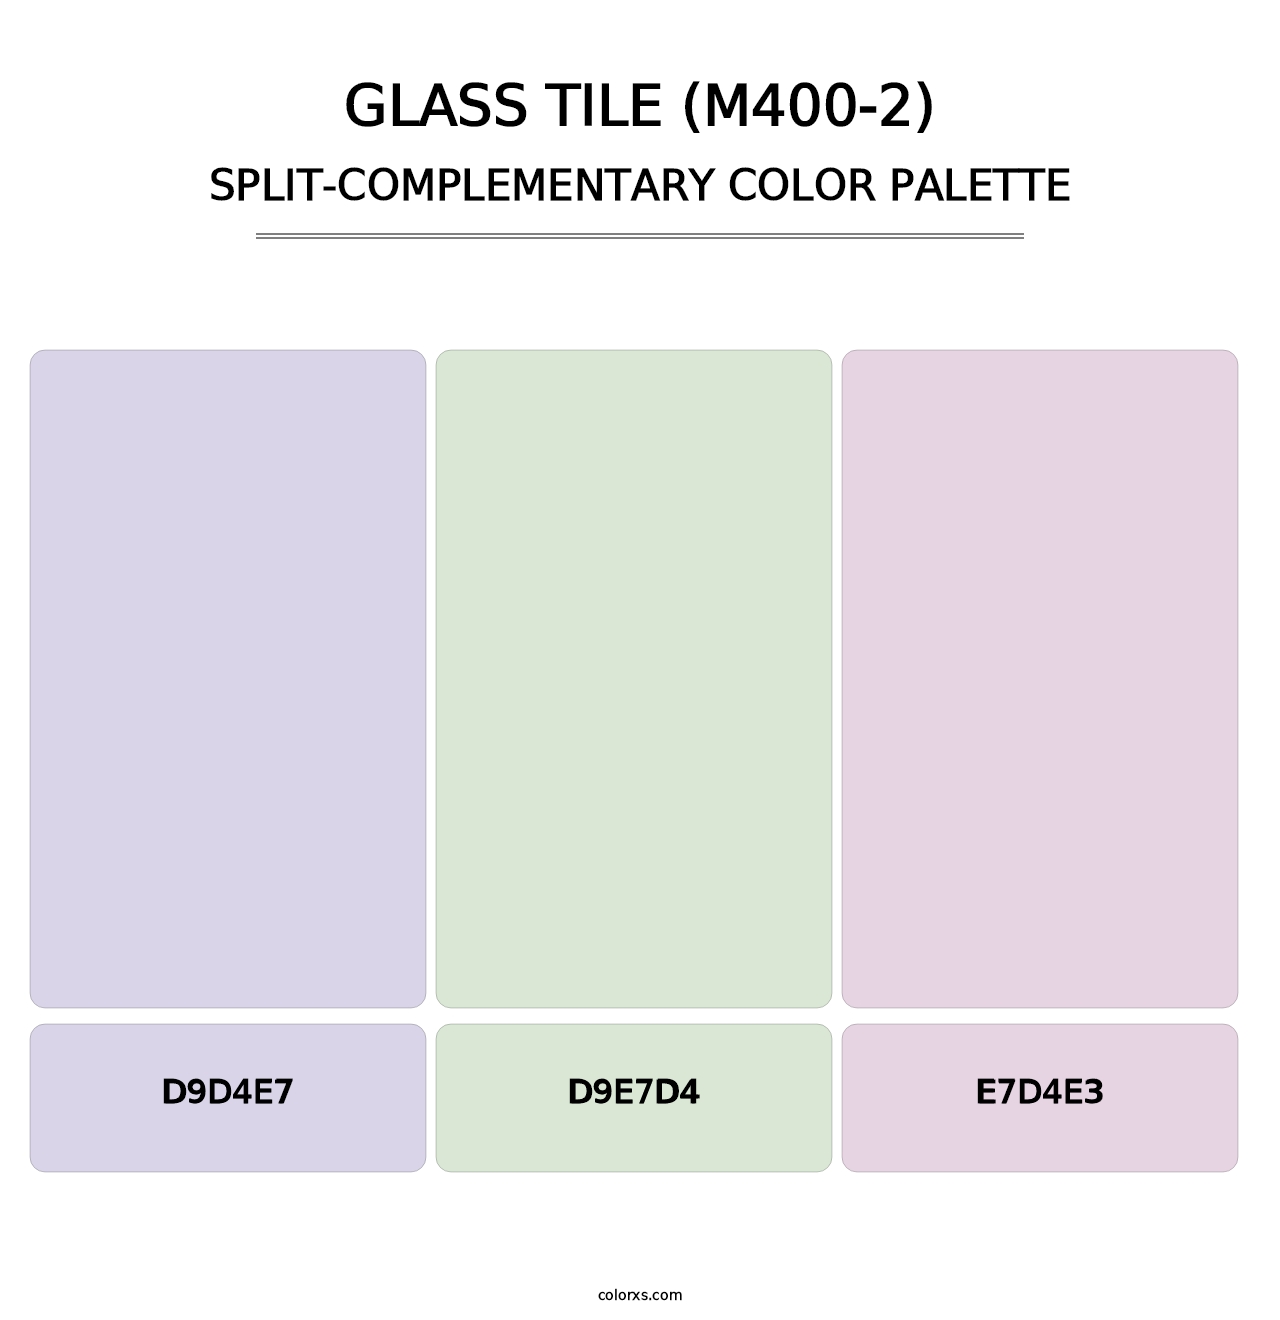 Glass Tile (M400-2) - Split-Complementary Color Palette